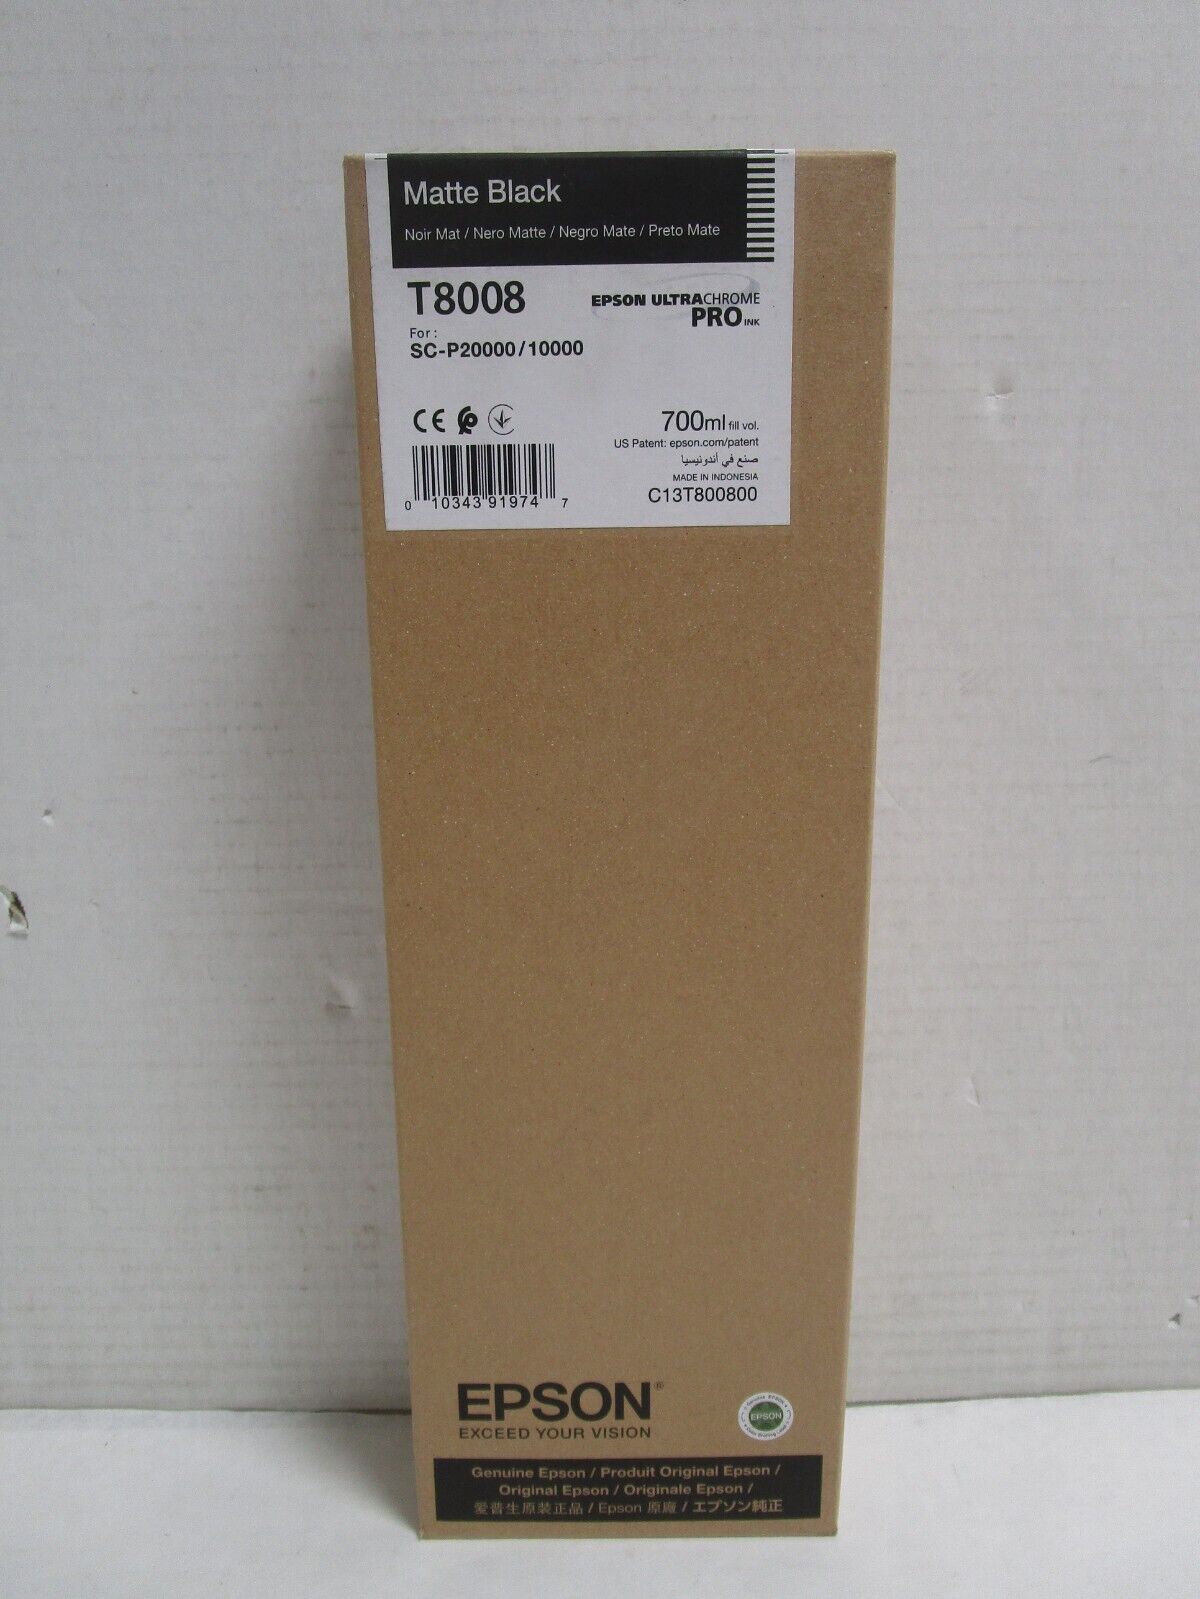 GENUINE EPSON T8008 Matte Black Ink Cartridge 700ml EXP. 06/2024 NEW SHIPS FREE